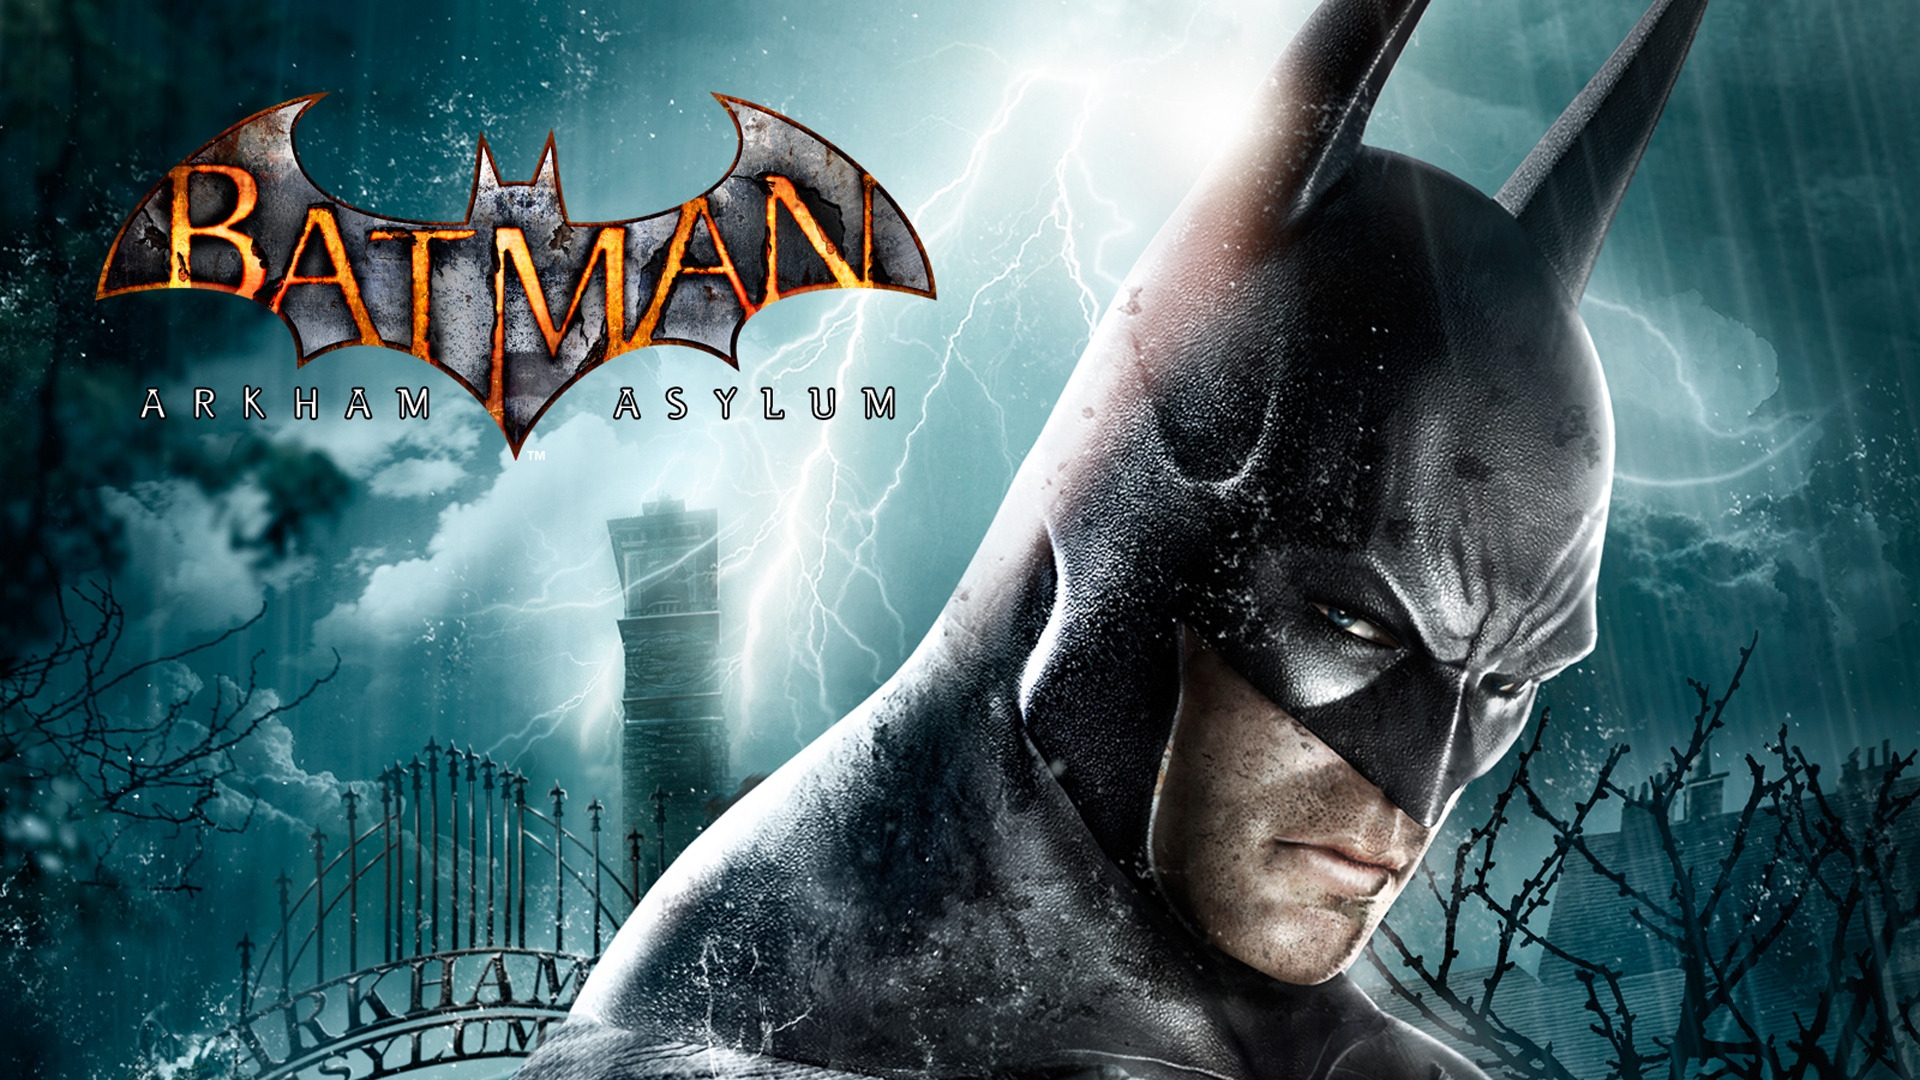 Batman Arkham Asylum for 1920 x 1080 HDTV 1080p resolution